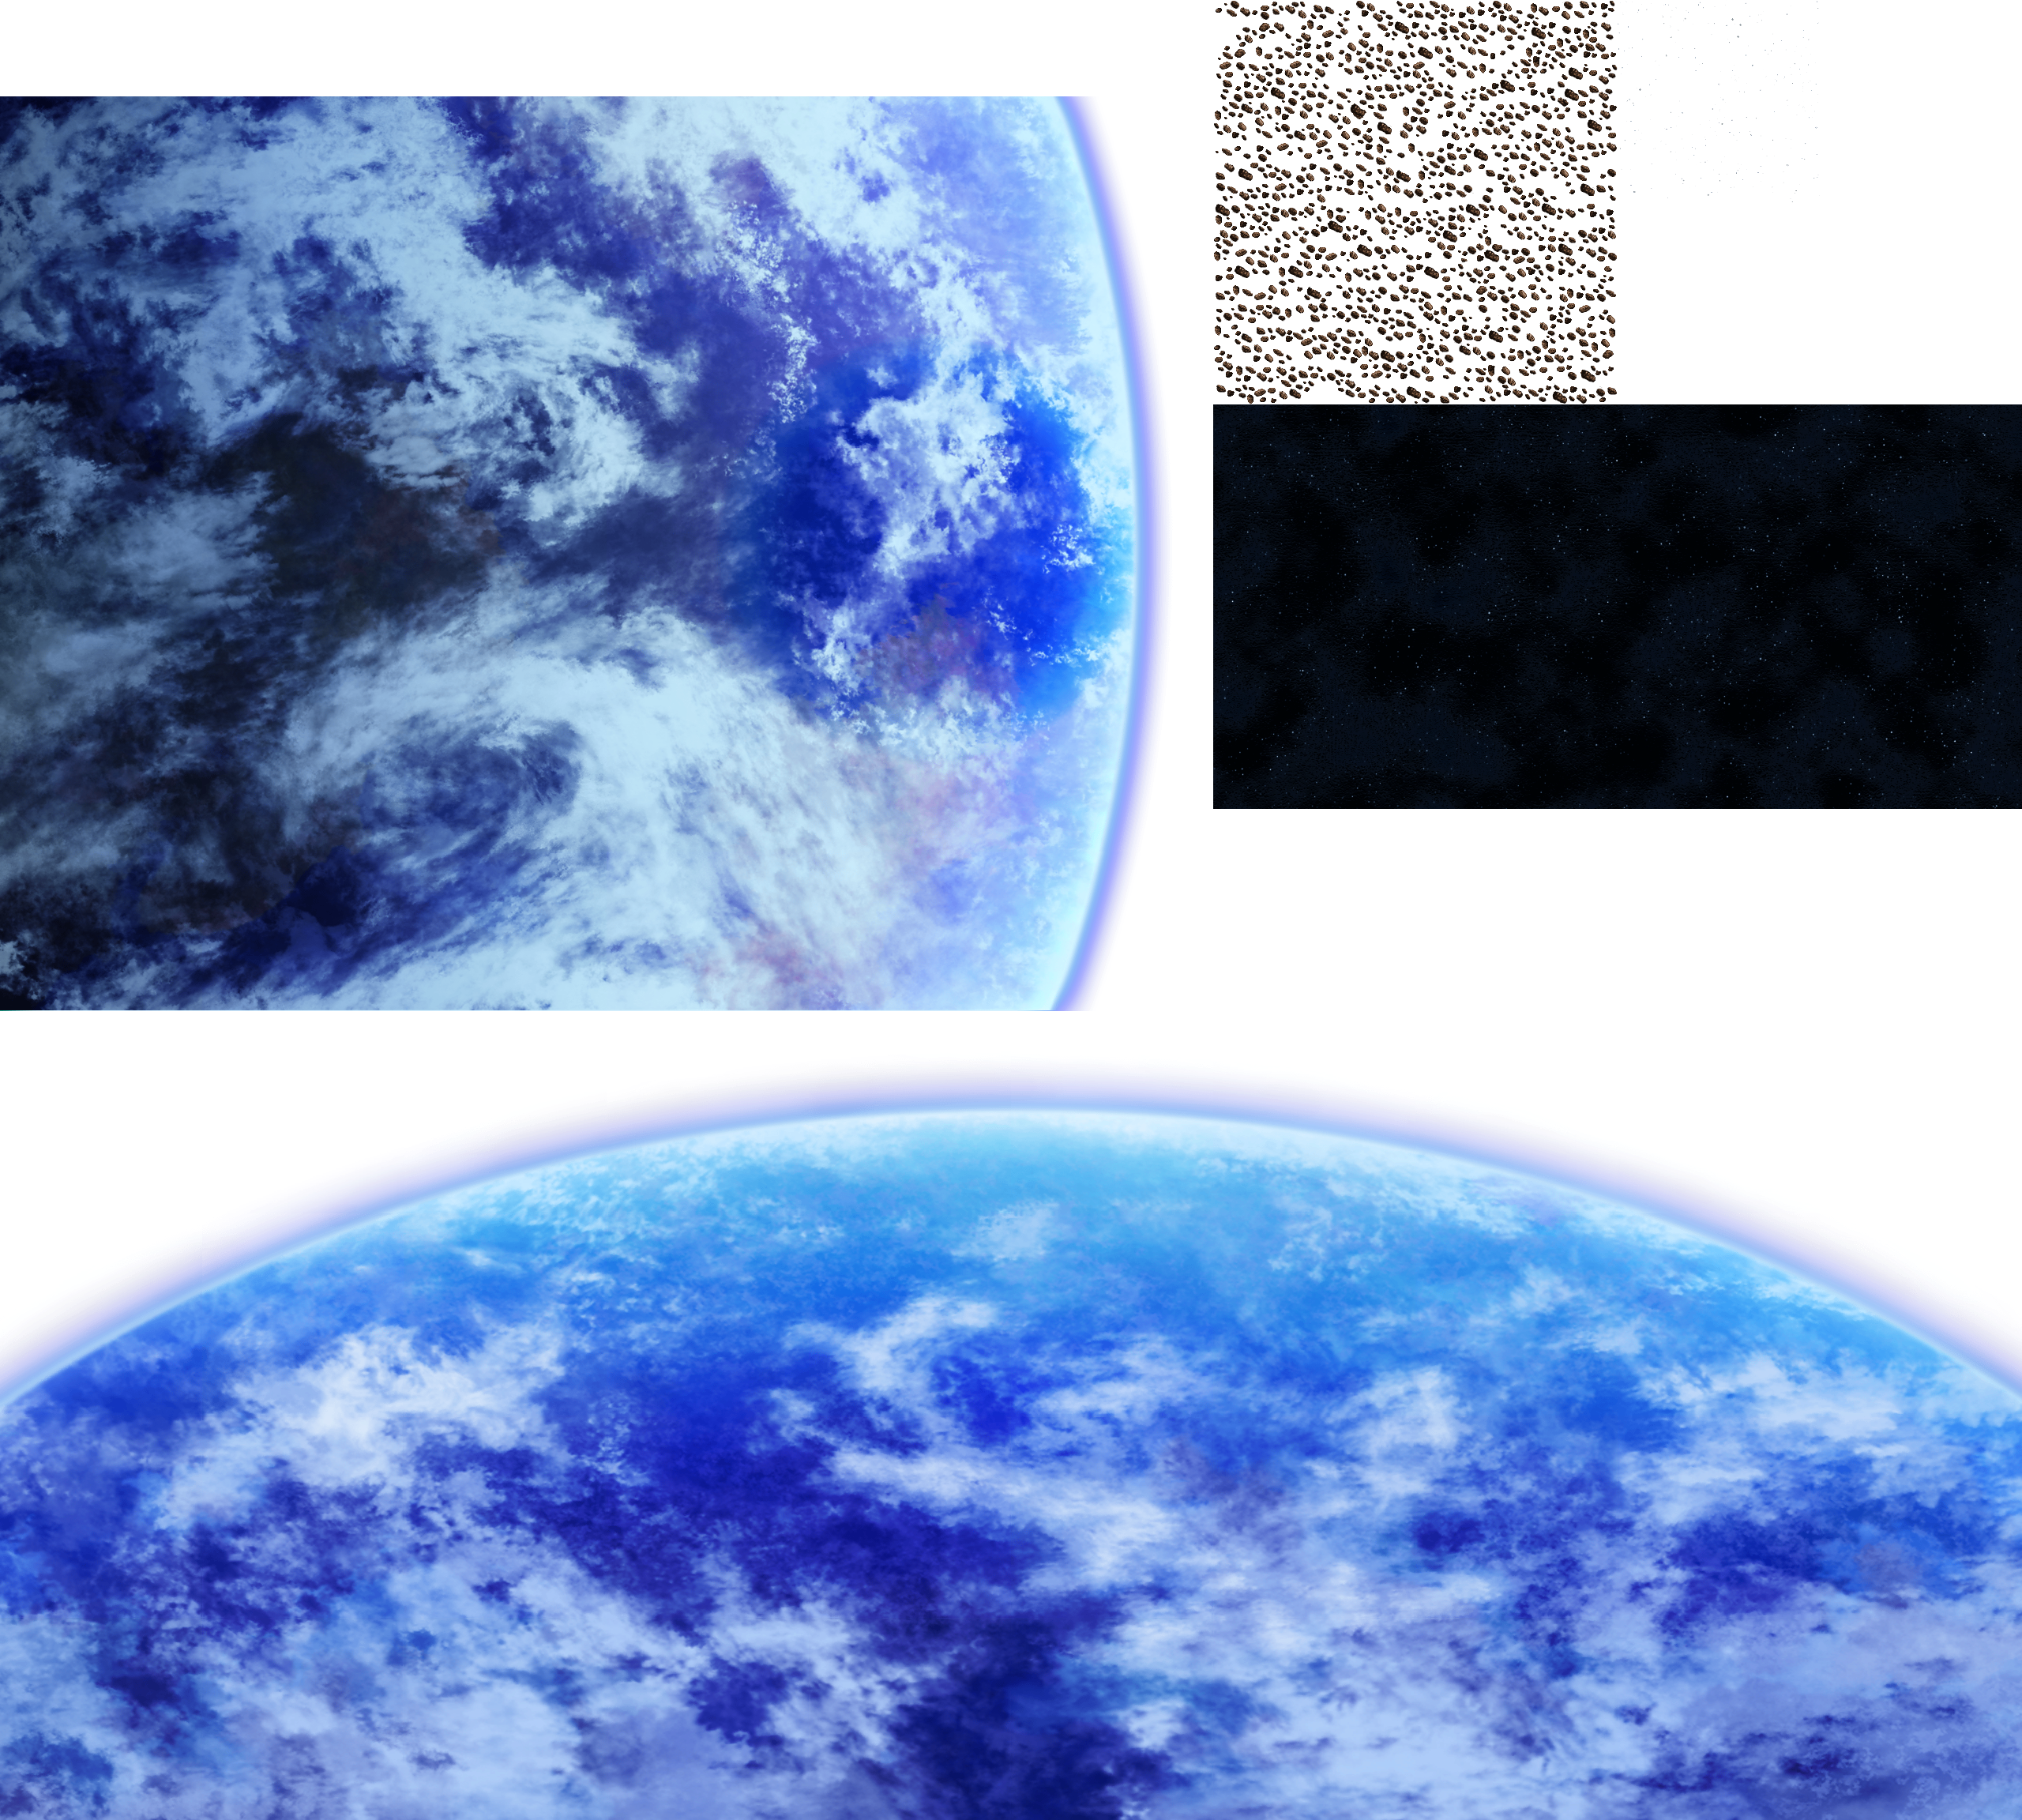 MS IGLOO Stage 4 Space Segment (I Saw The Ocean In Jaburo's Skies)